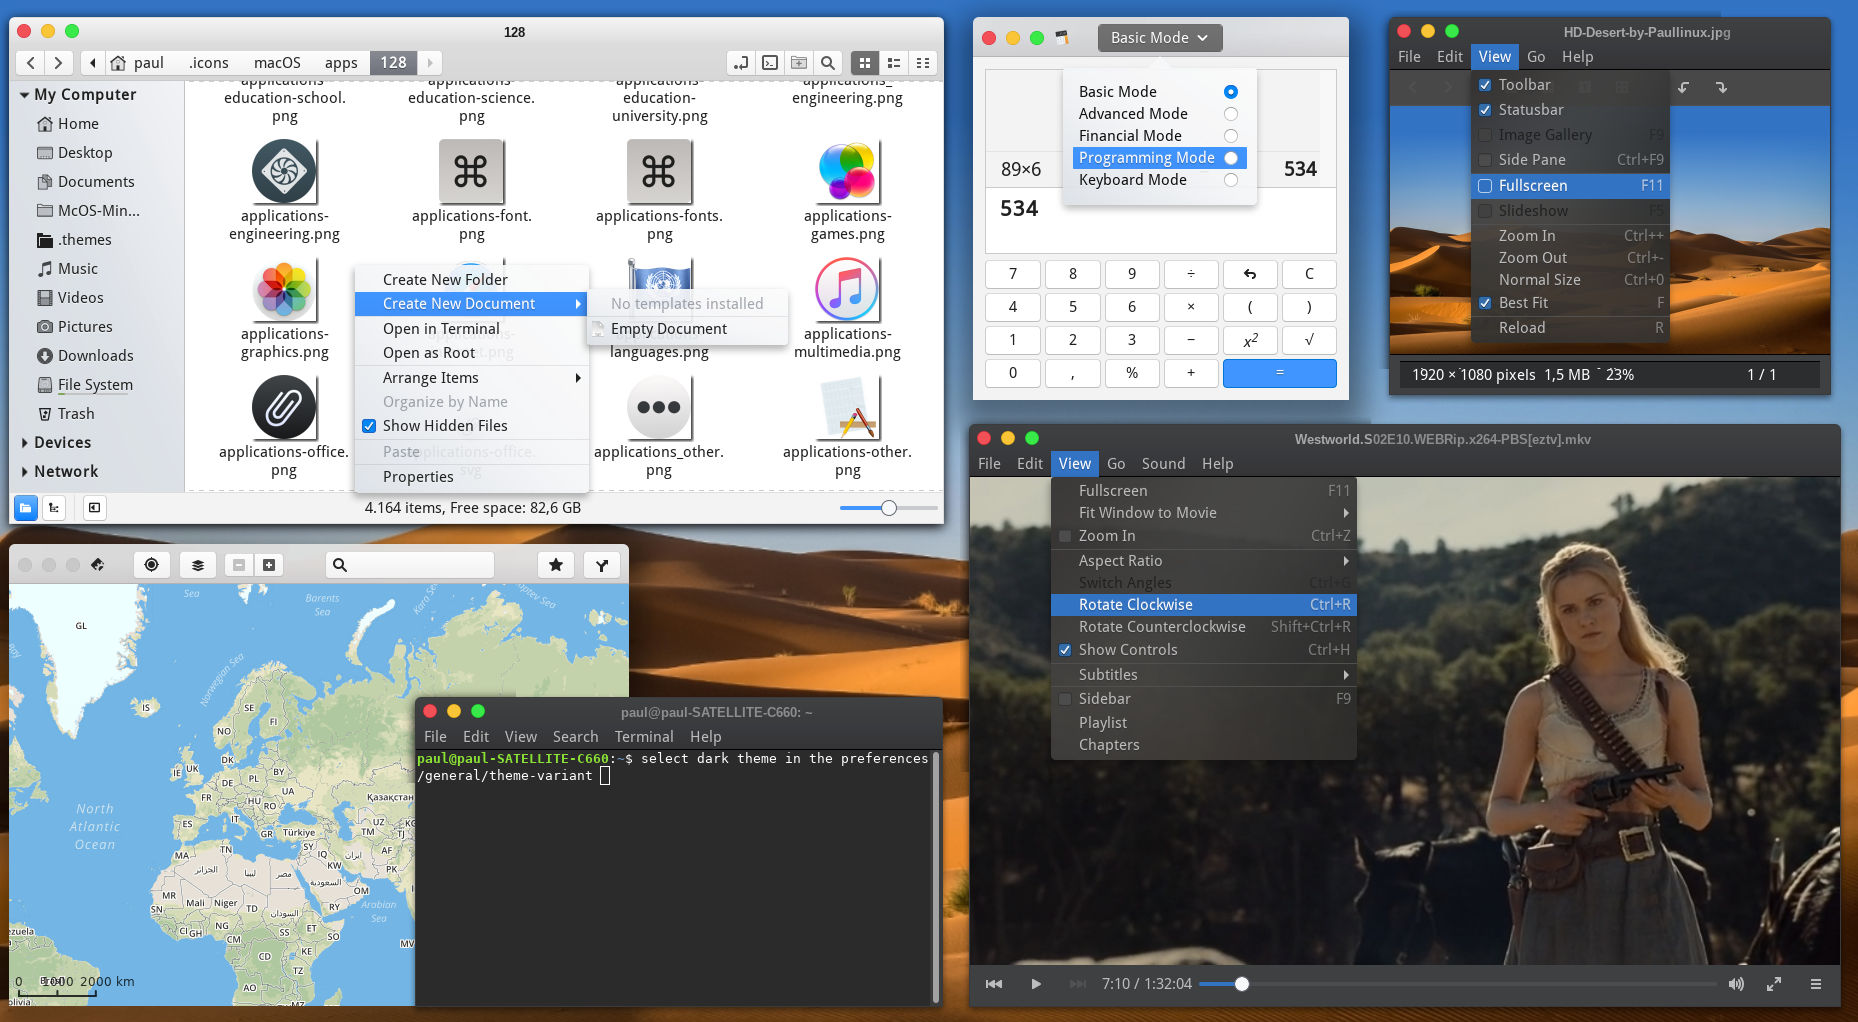 apple mac theme for windows 10